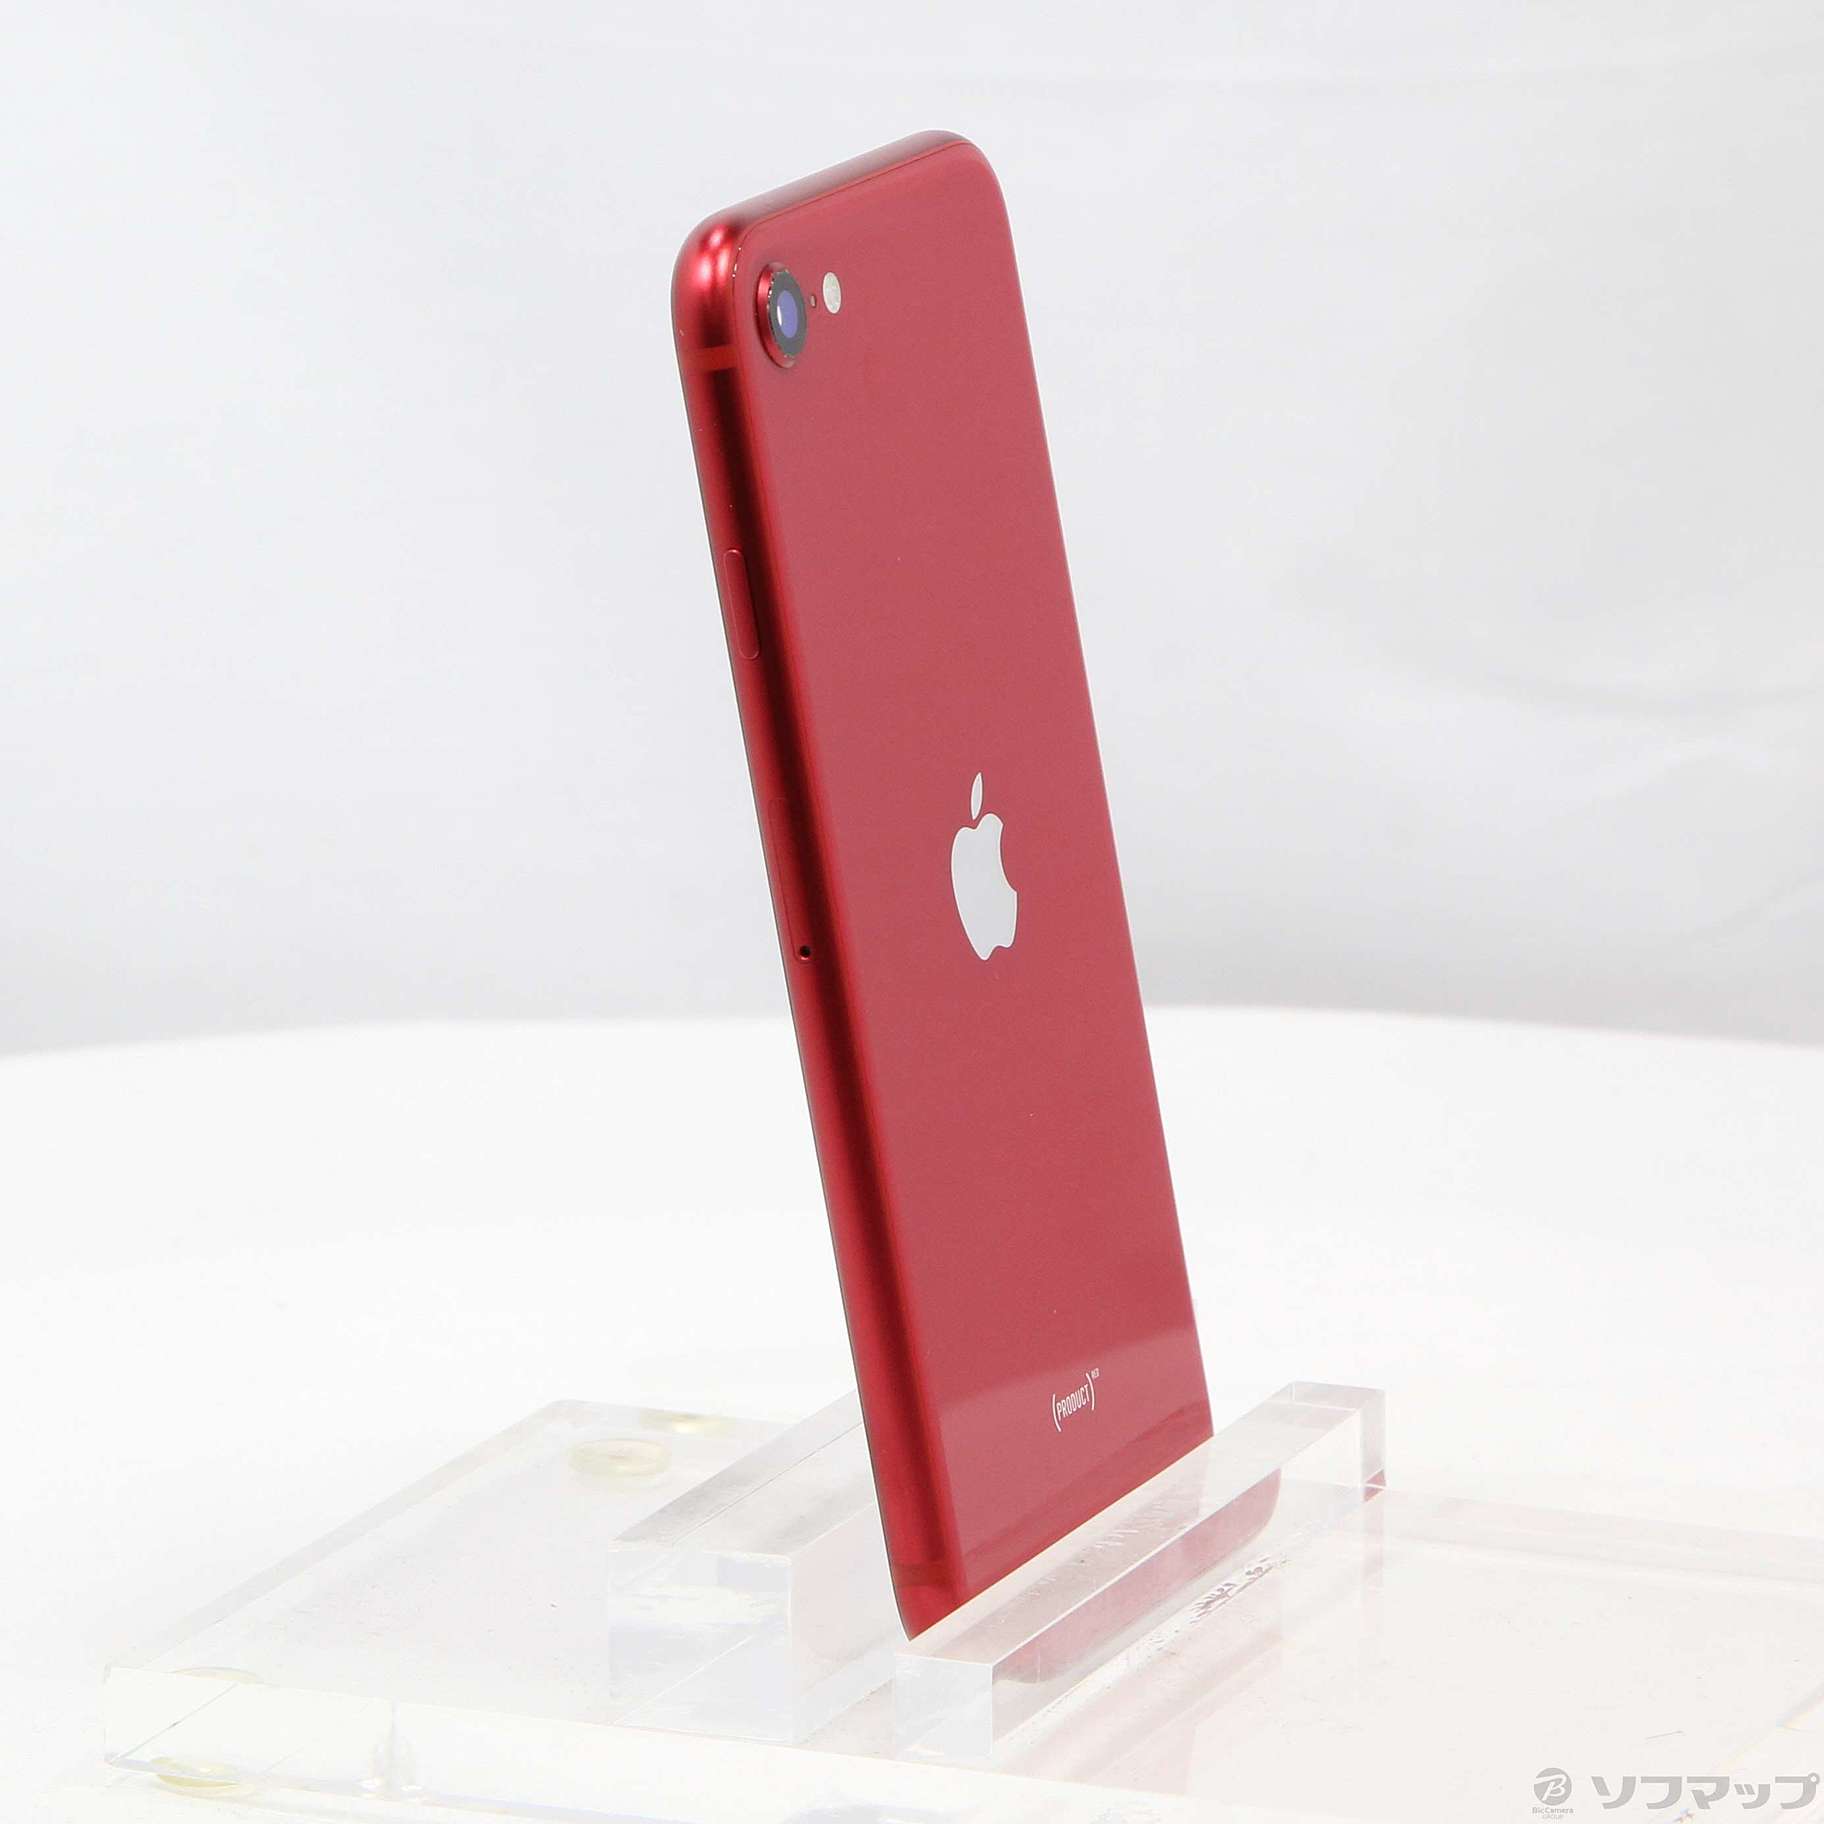 iPhone SE(第二世代)product Red 128GB 未使用品